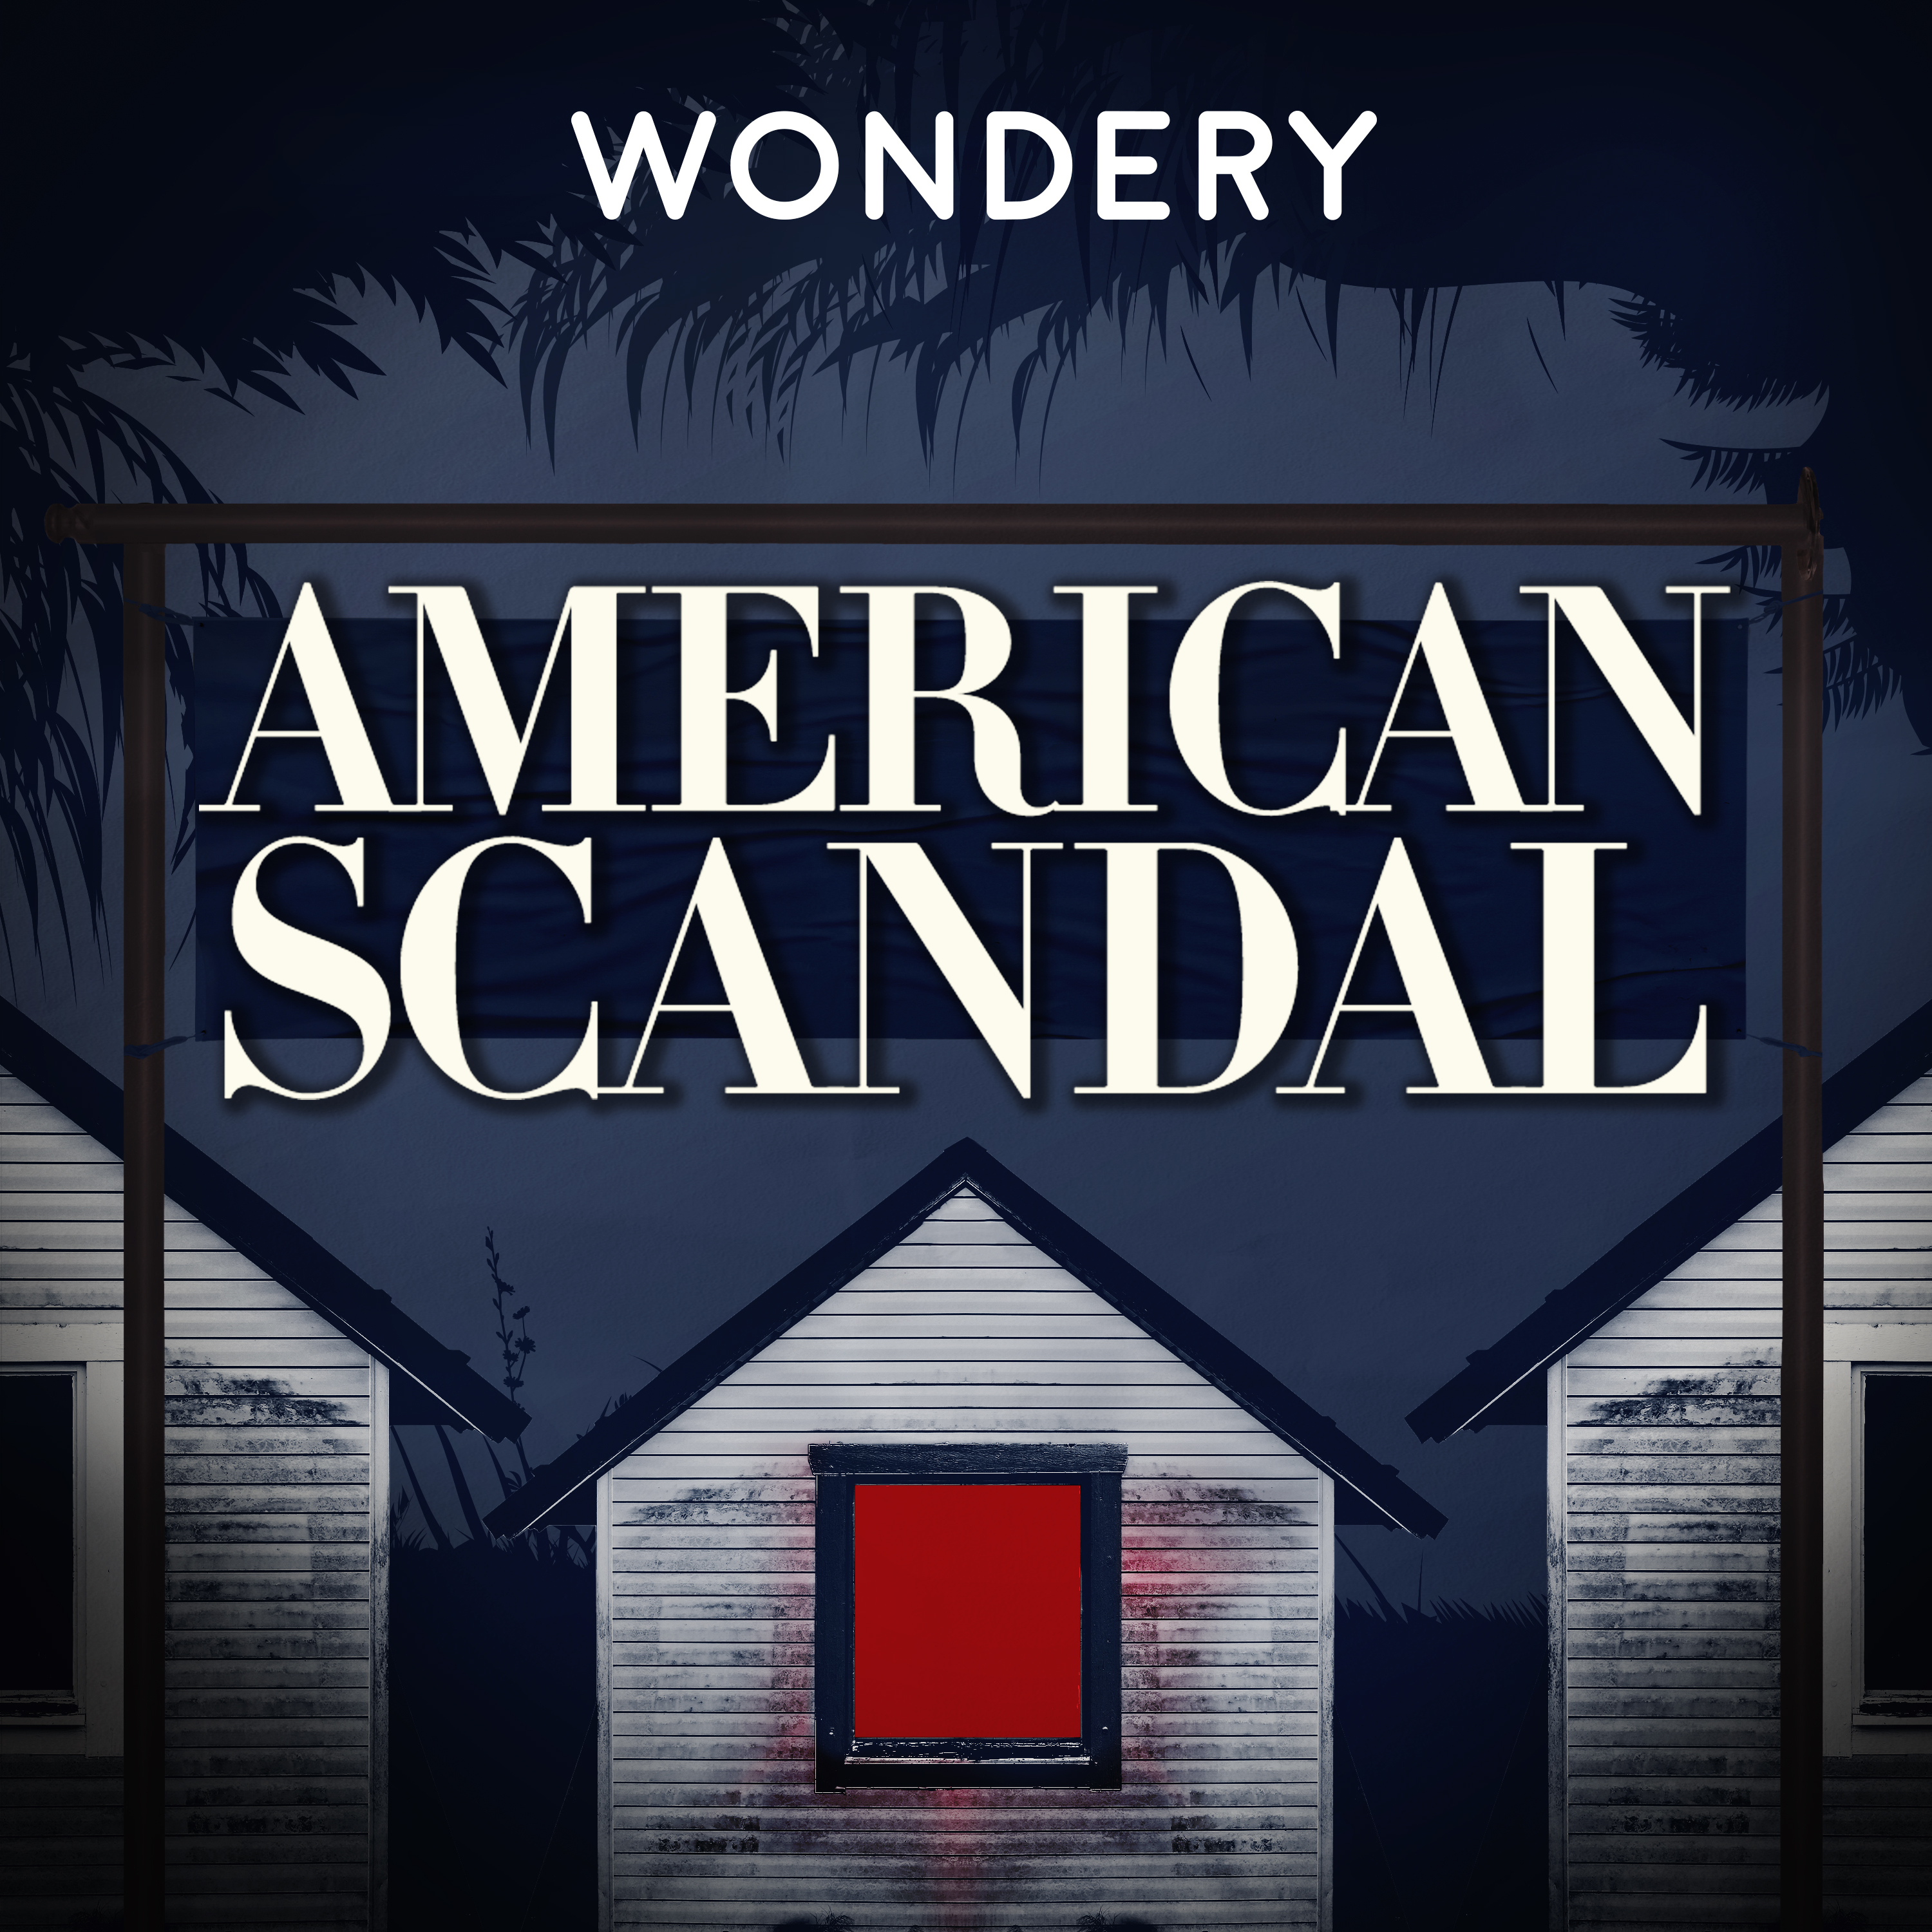 American Scandal by Wondery